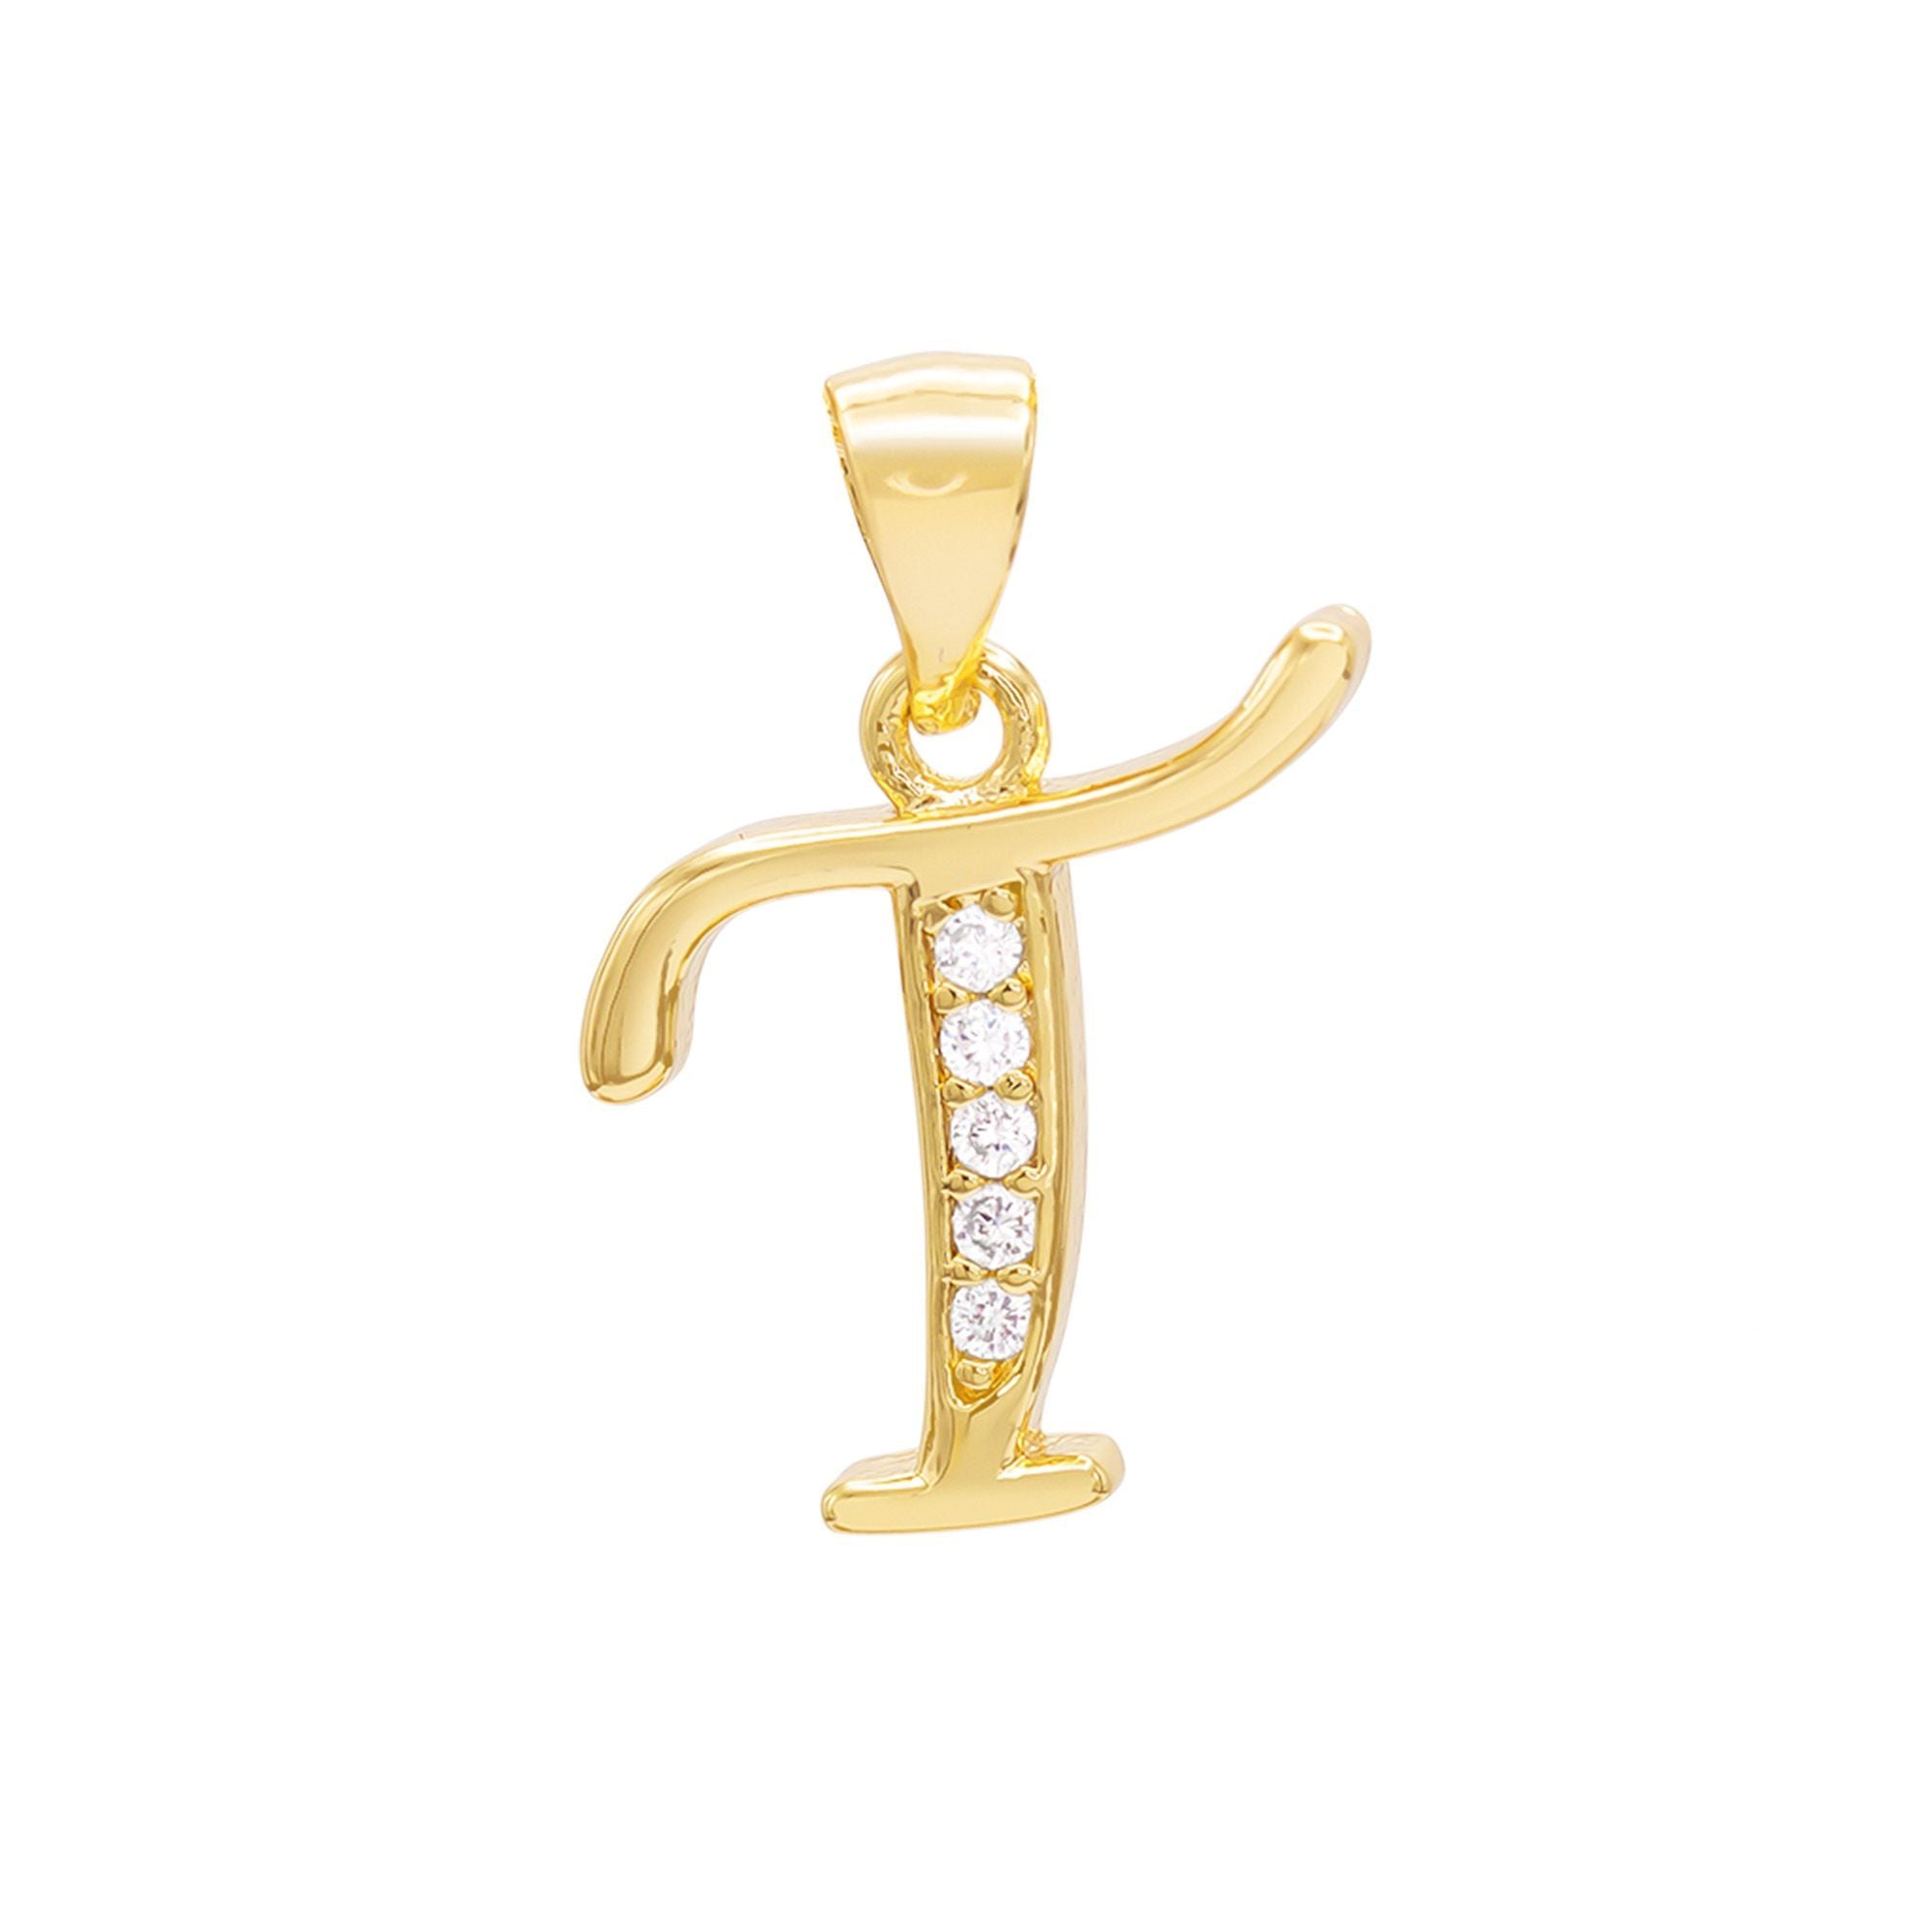 BEBERLINI Initial Letter M CZ Pendant 14K Gold Filled Cuban Link Anklet Set  2.5 mm Chain 10 Foot Bracelet Jewelry for Adult Female Teen Girls Brass 